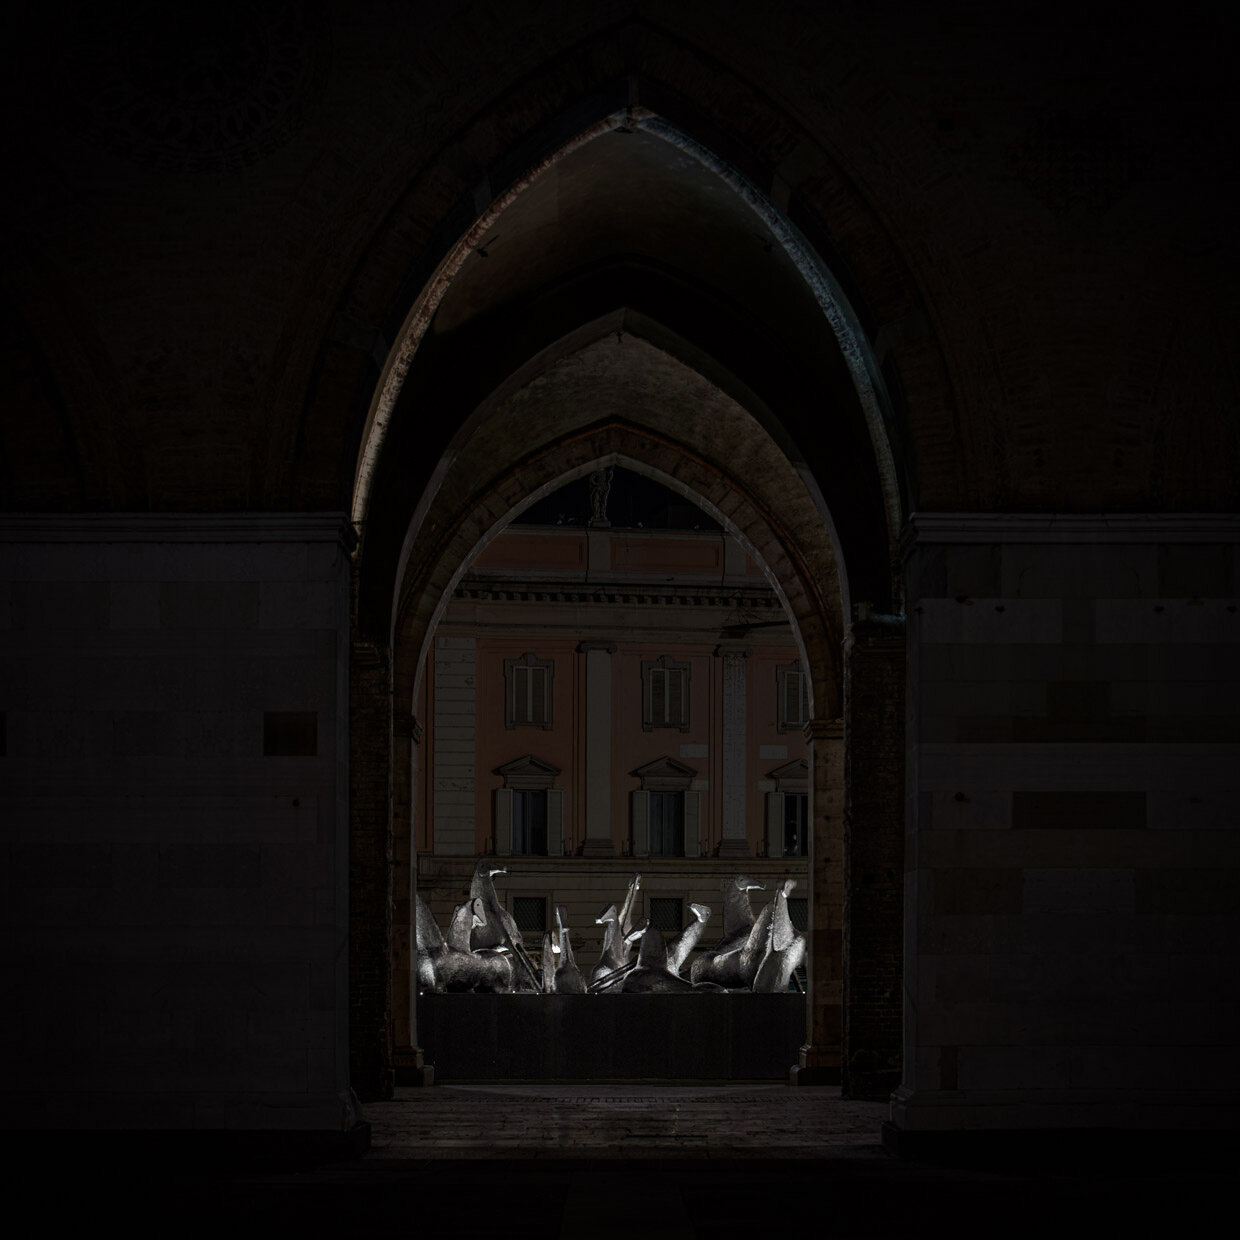 Instalación Mimmo Paladino en Piacenza | © Davide Groppi srl | All Rights Reserved